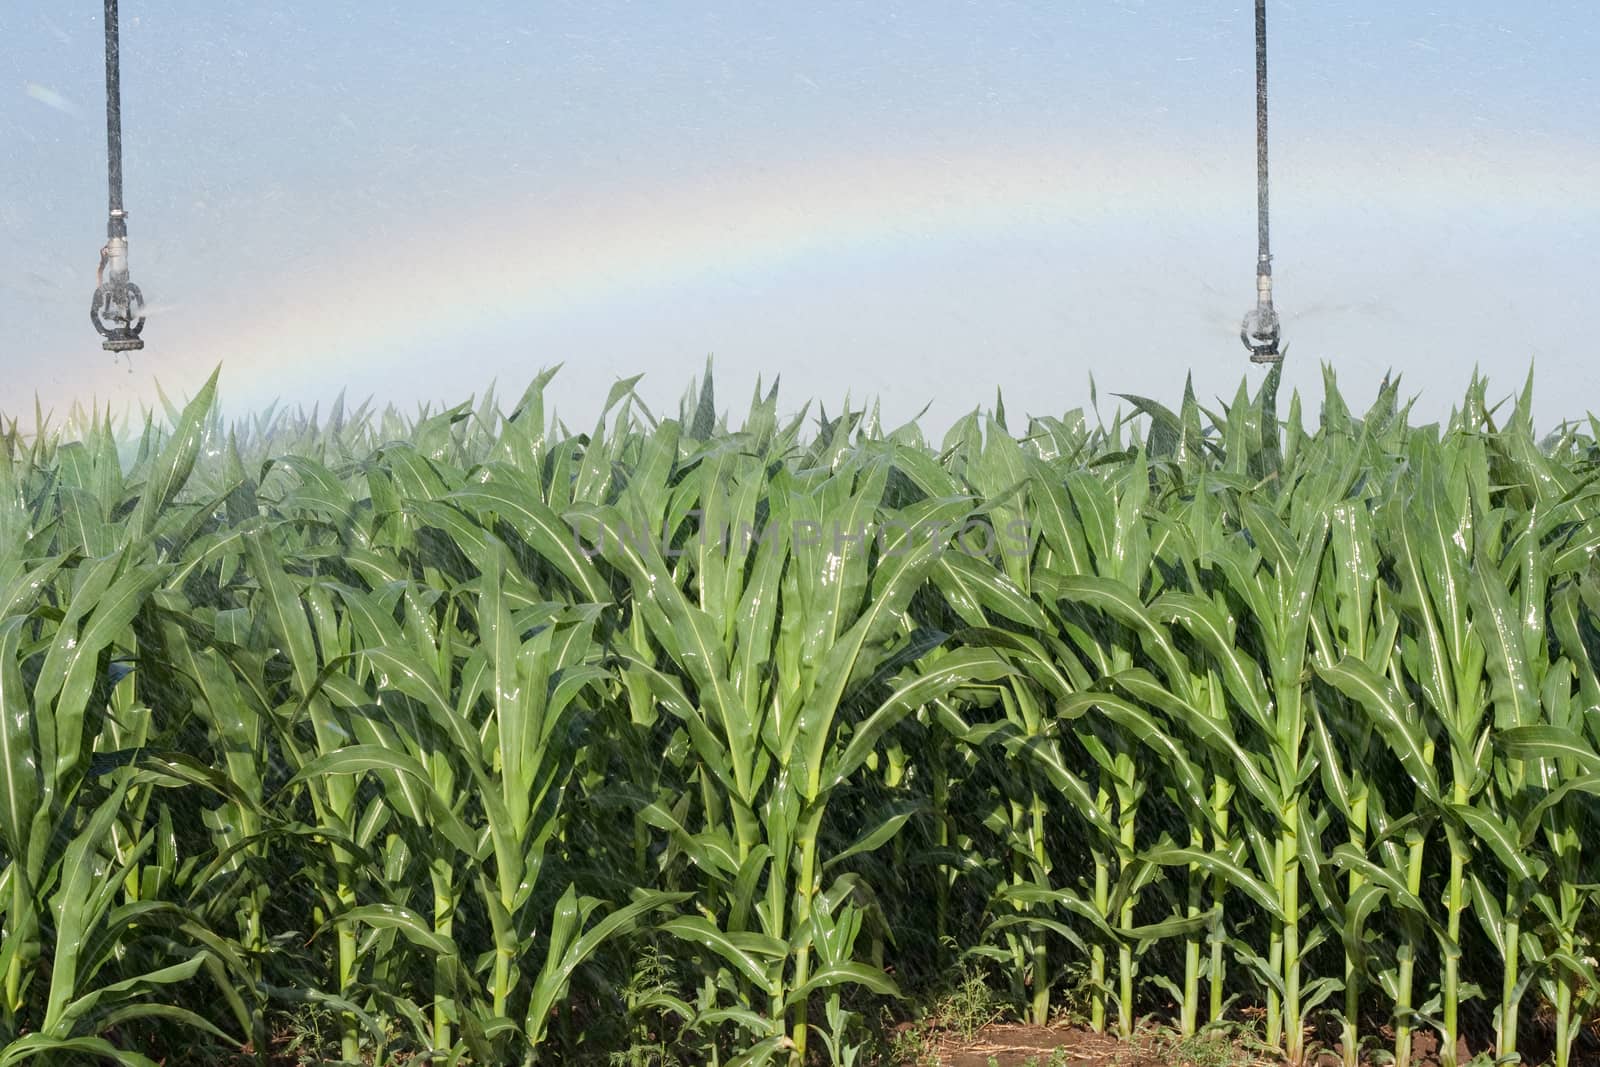 rainbow in a corn field while prinklers work